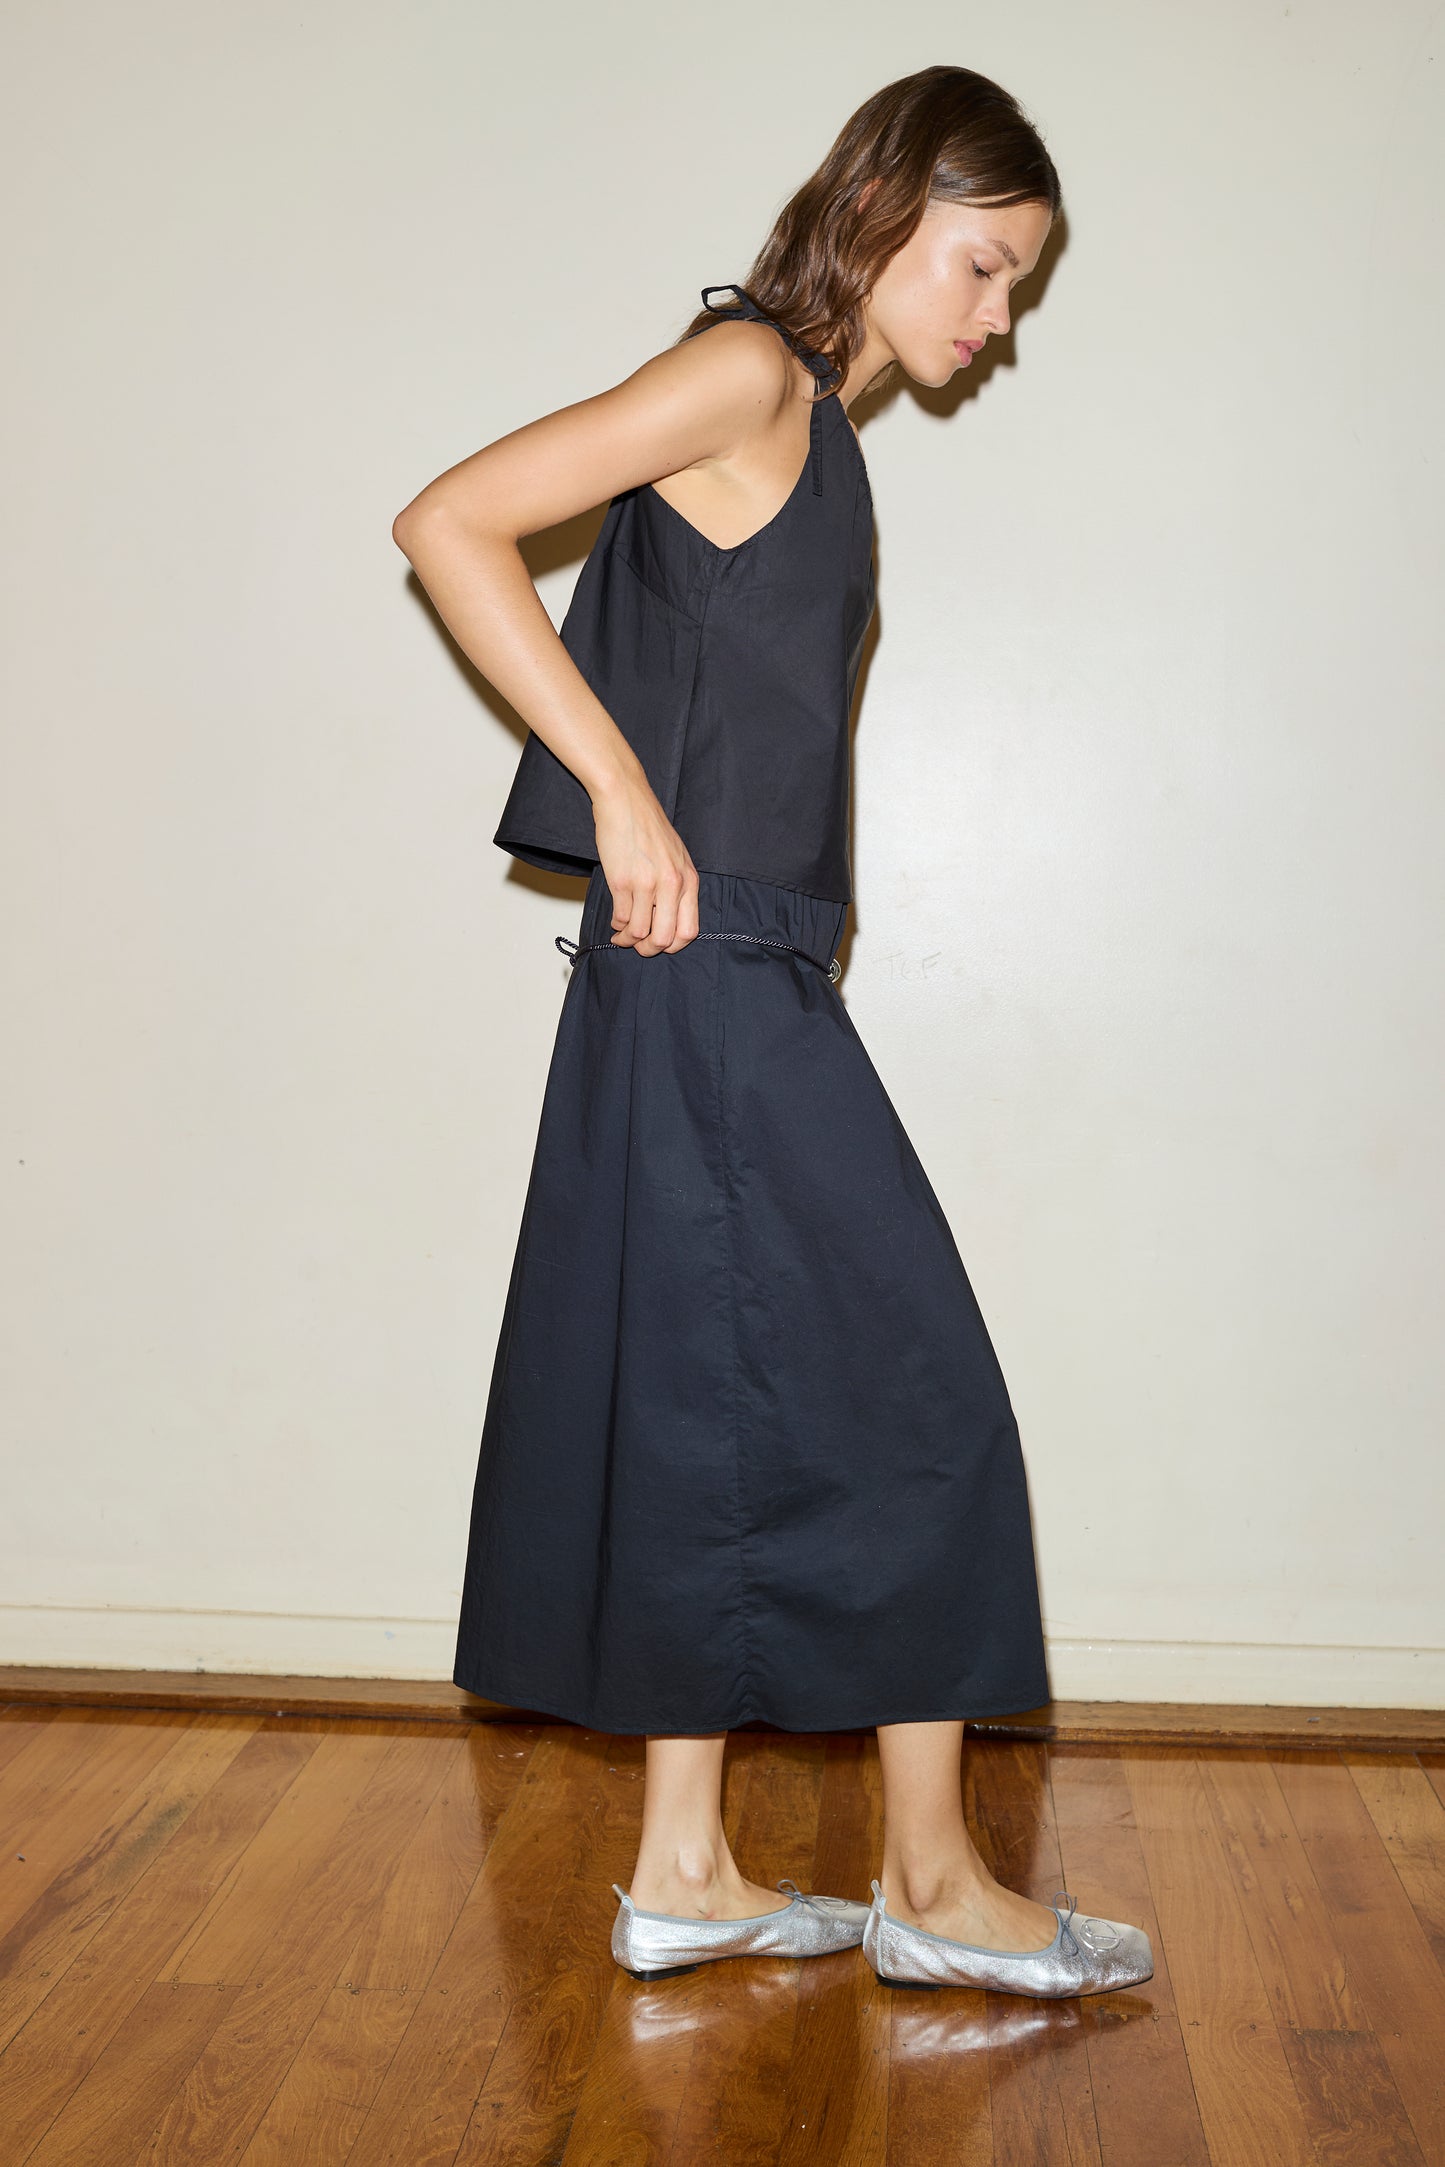 Female model wearing The Multi Strap Top - Black by Deiji Studios against plain background